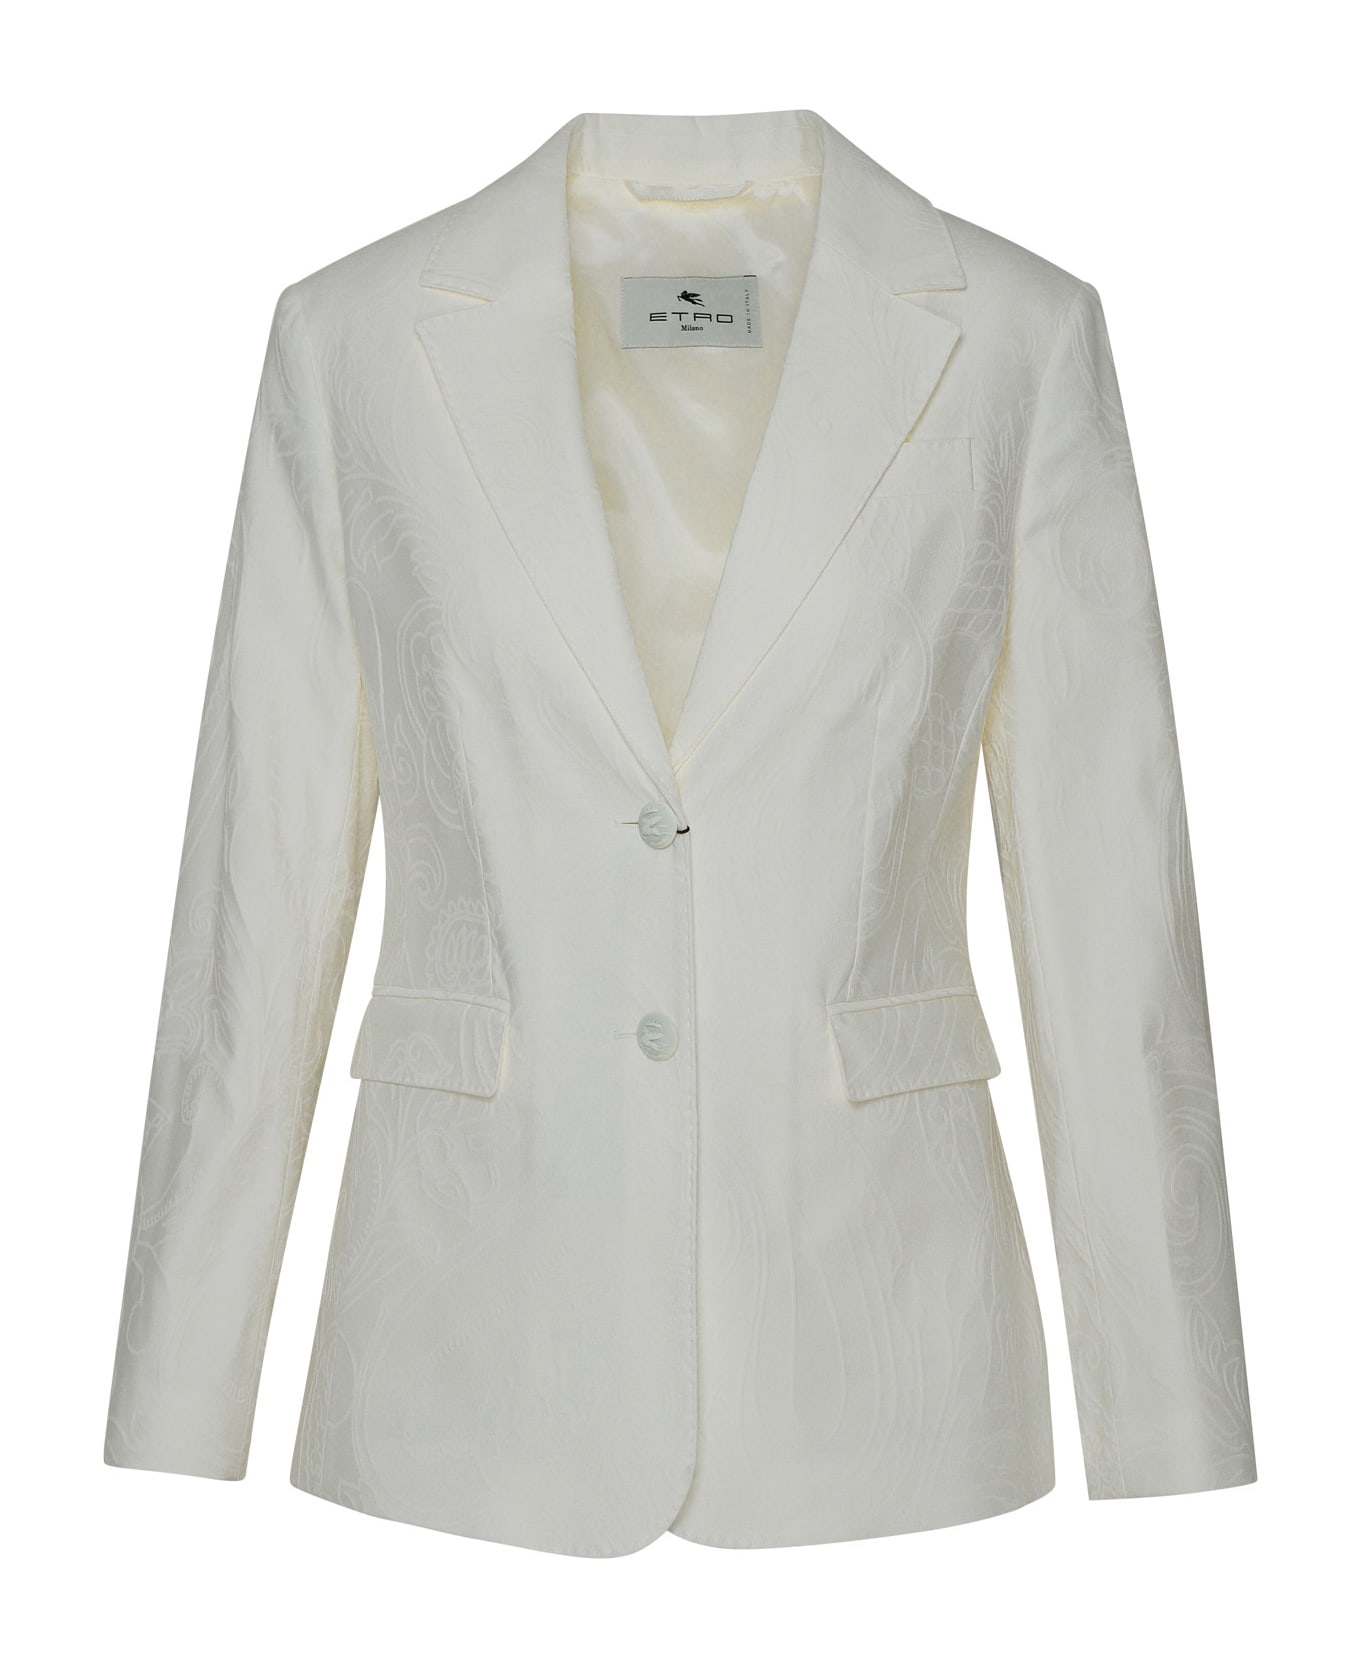 Etro Ivory Cotton Blend Blazer Jacket - Bianco